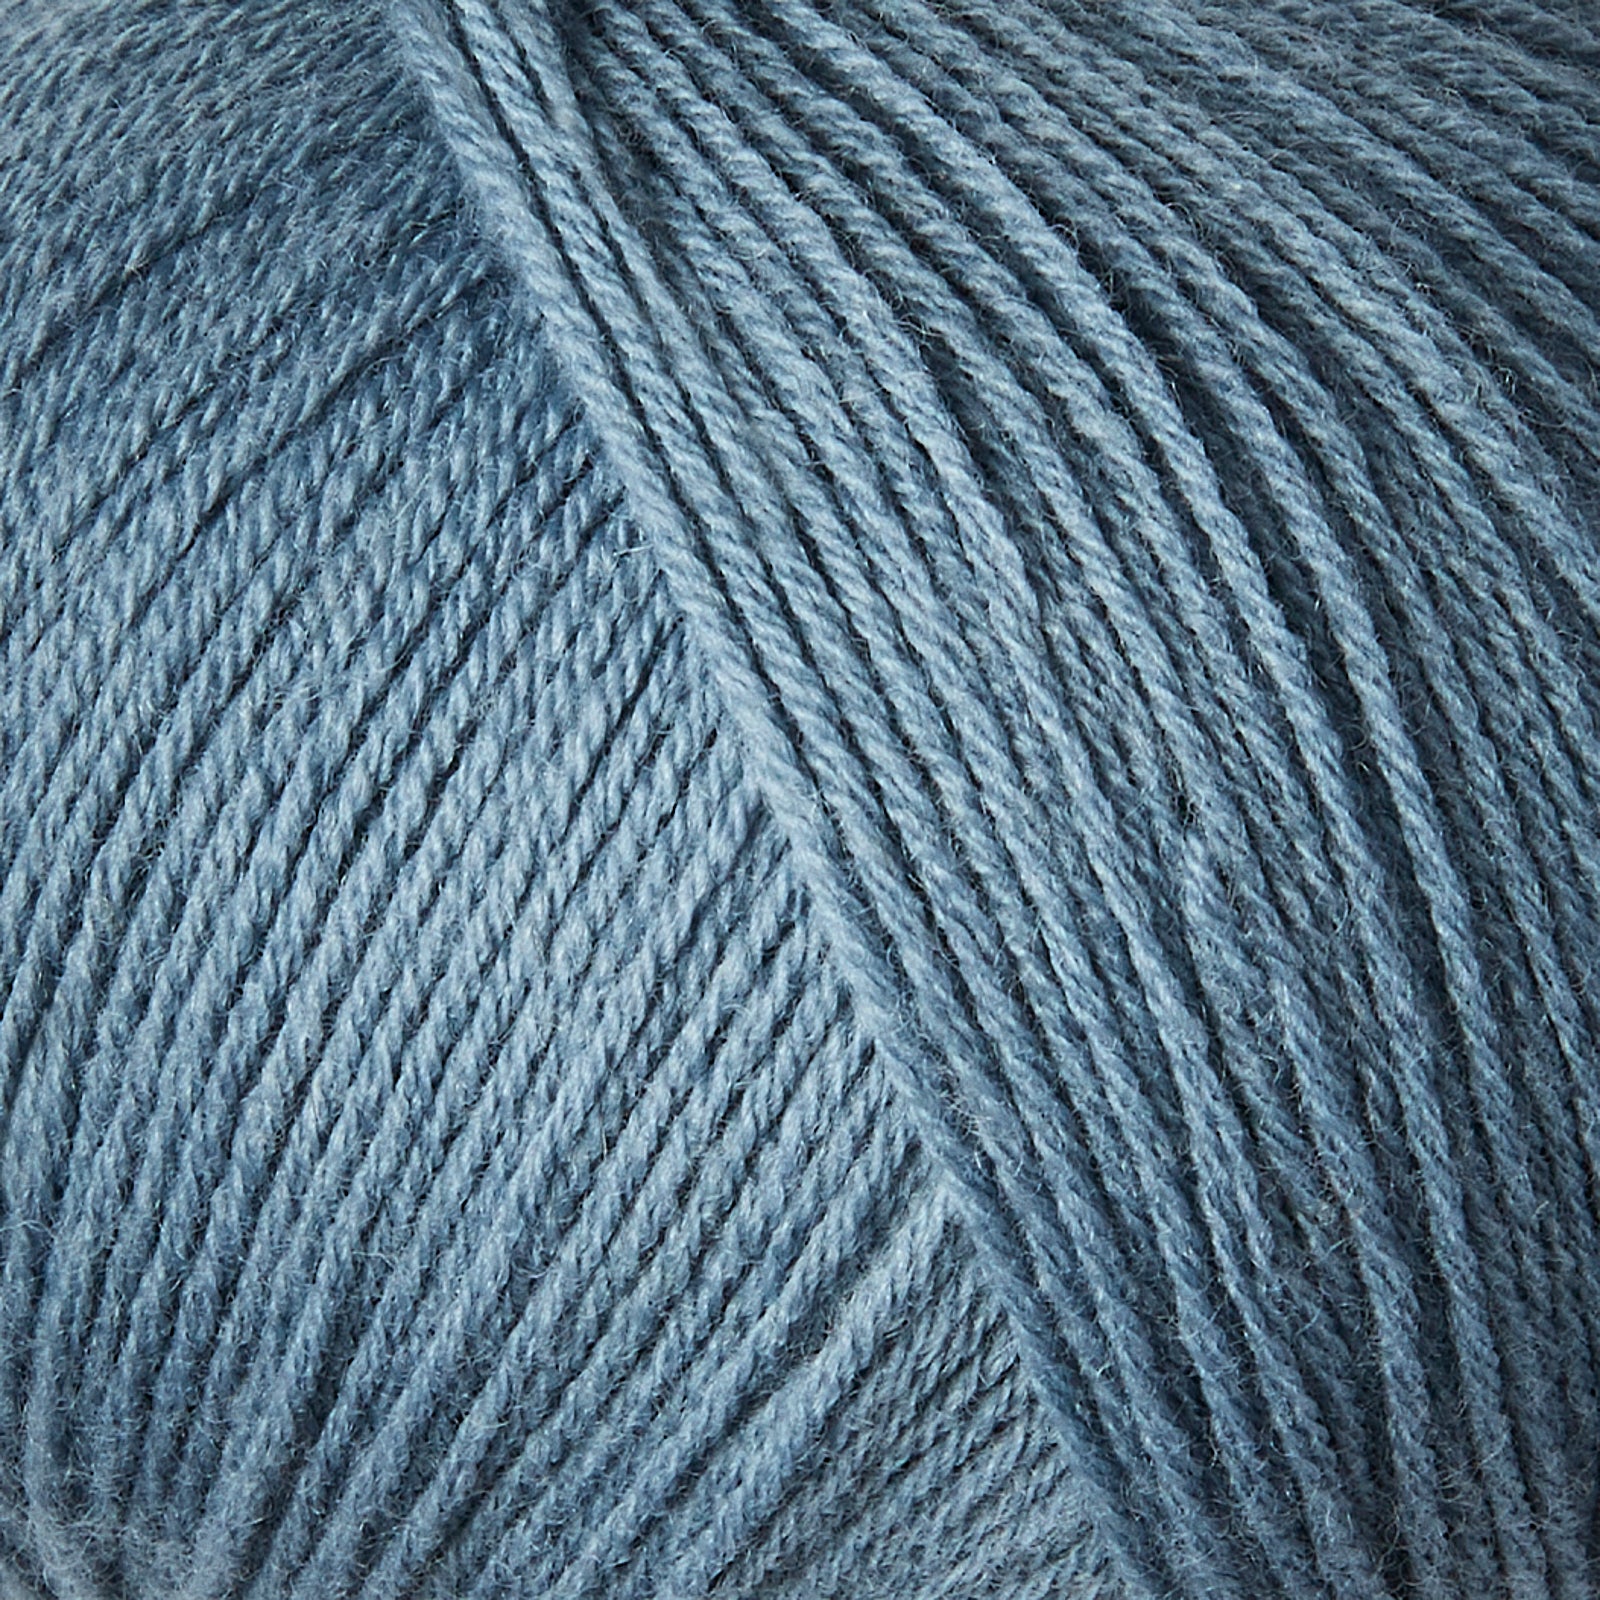 Knitting for Olive Merino - Dusty Dove Blue